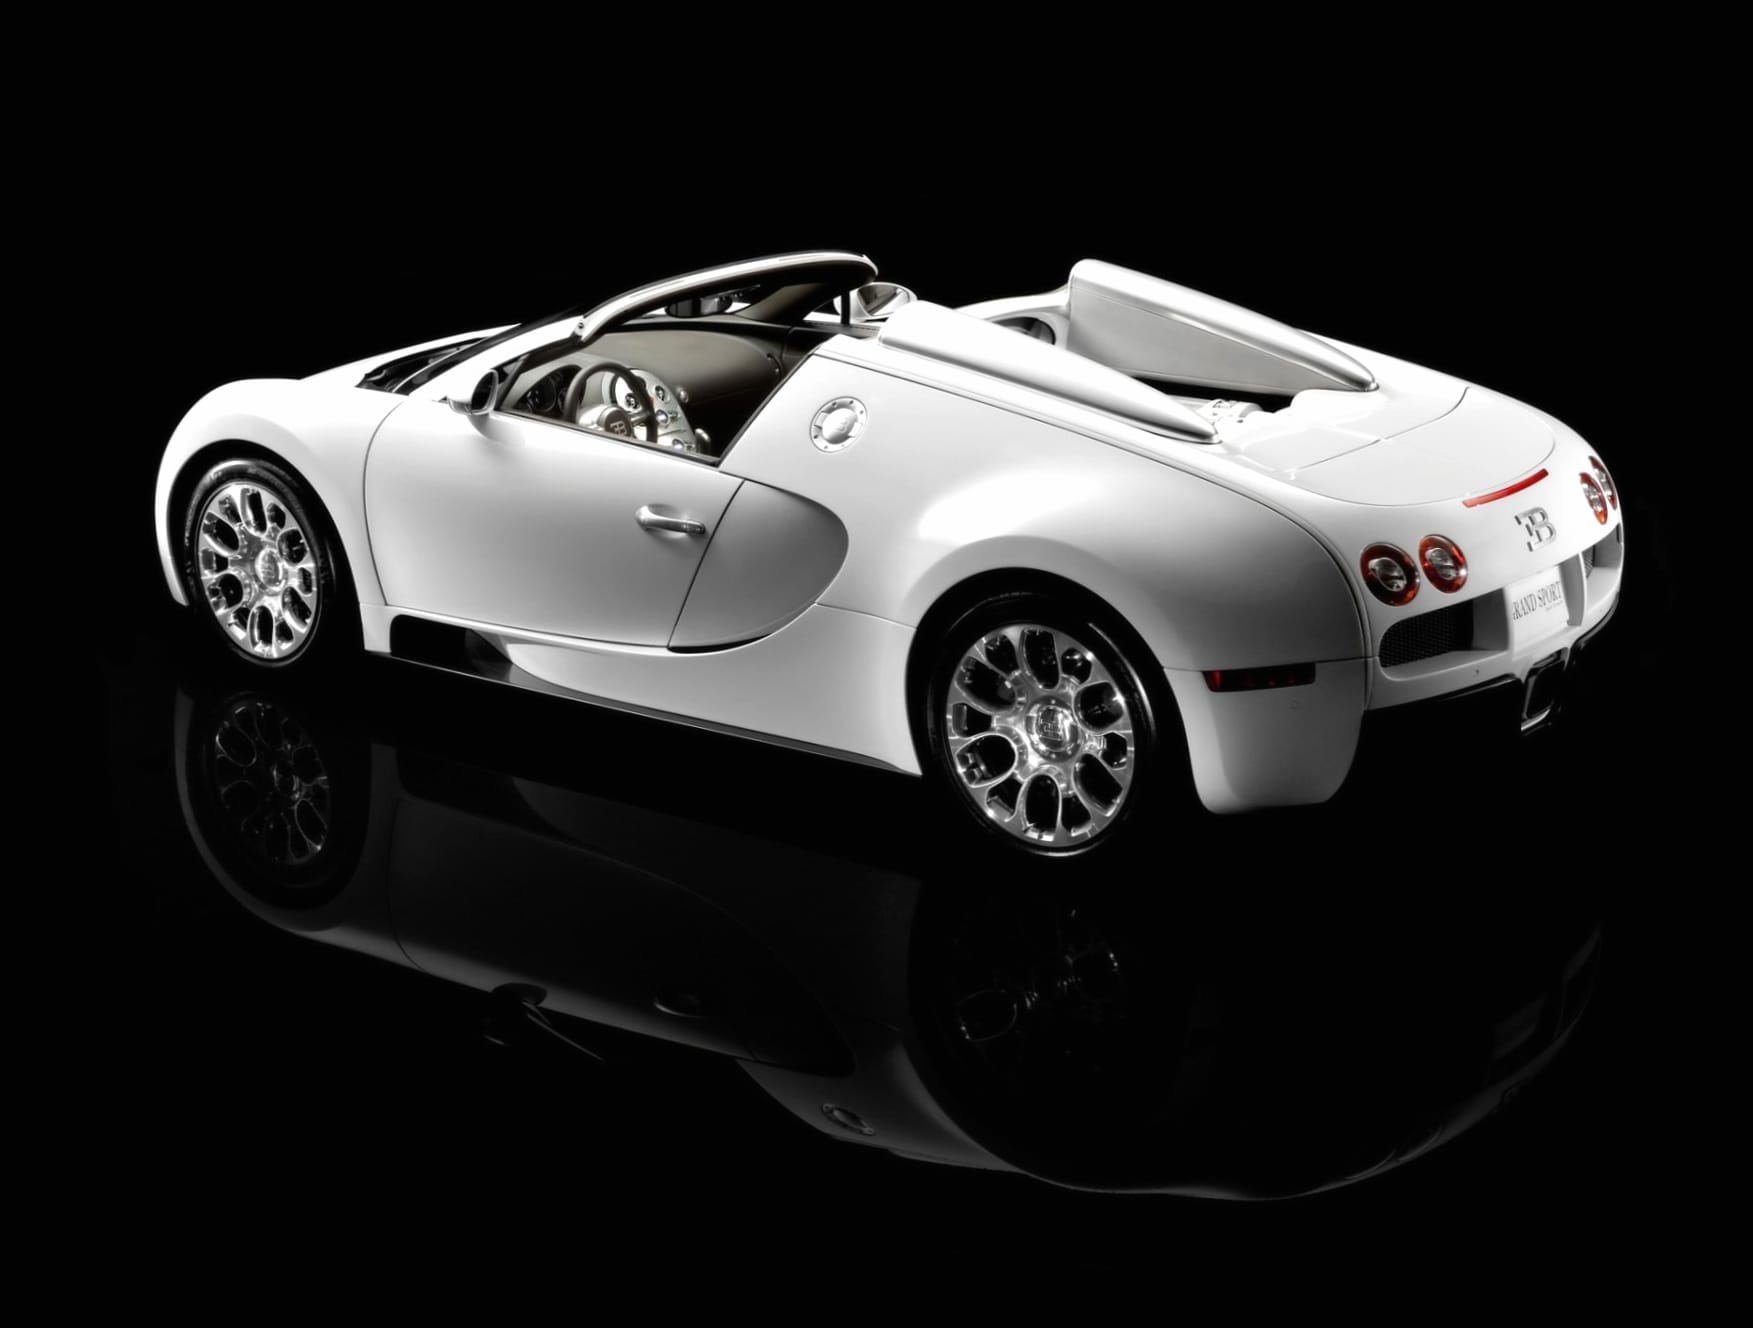 Bugatti Veyron 16-4 Grand Sport at 1280 x 960 size wallpapers HD quality